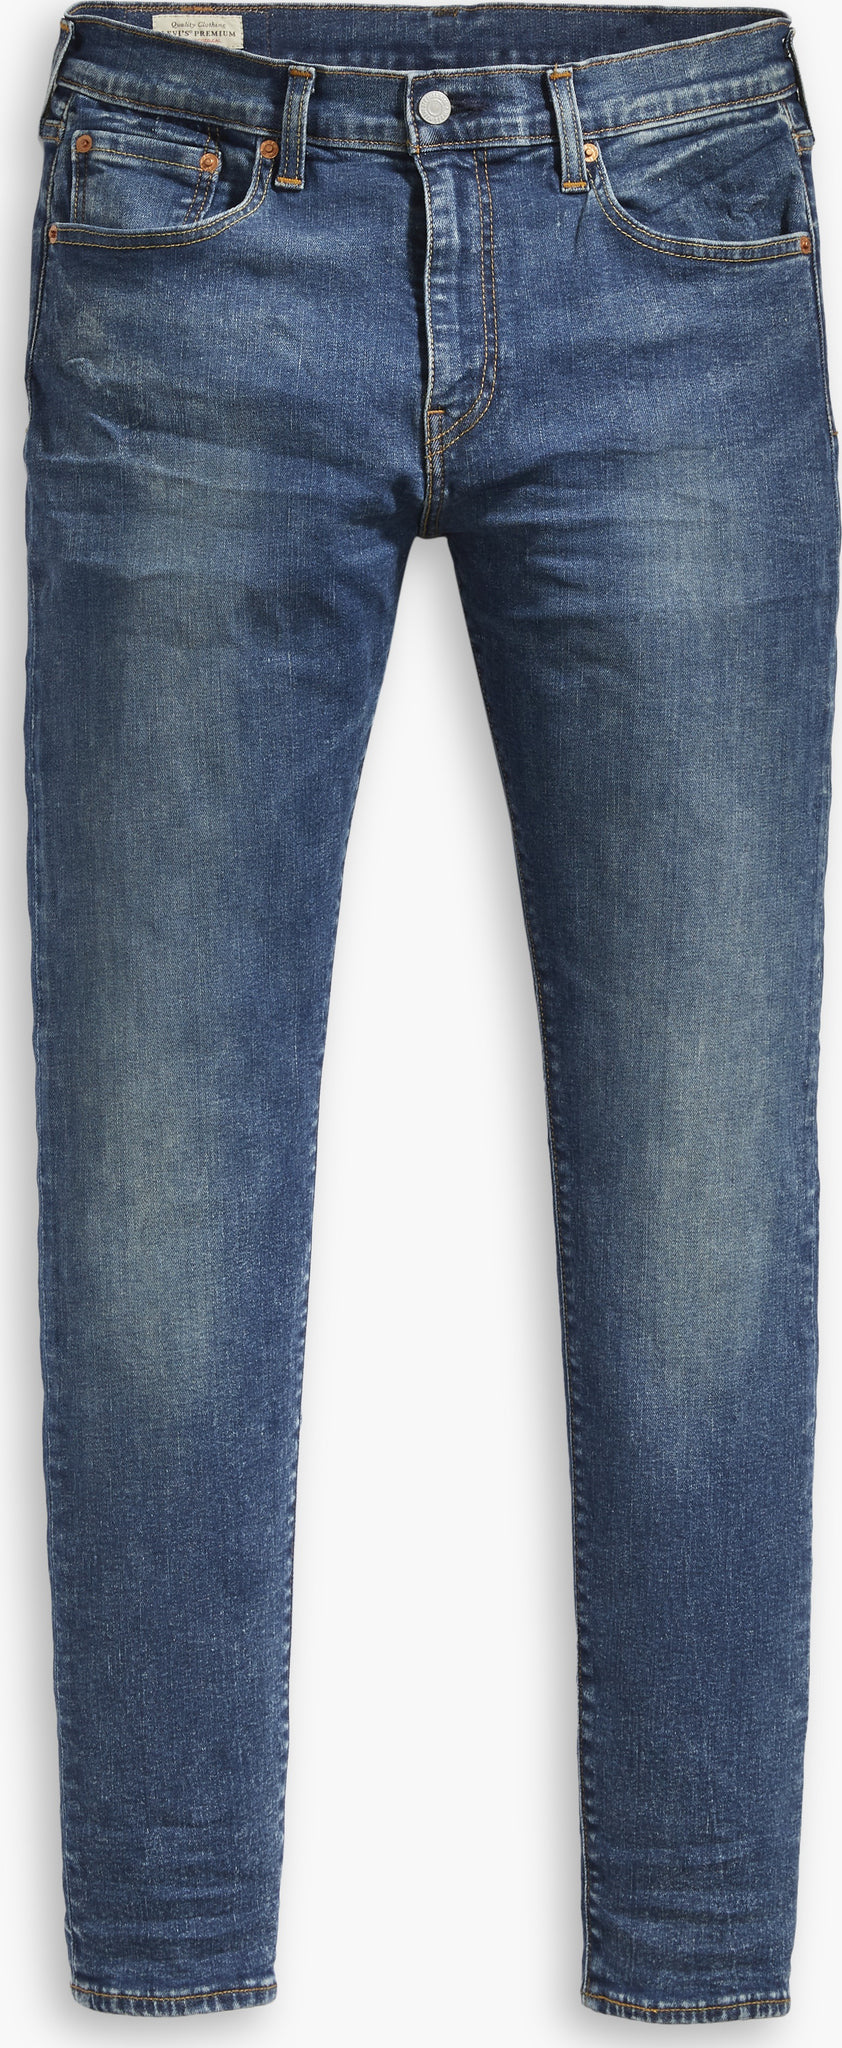 Levi's 512 Slim Taper Fit Advanced Stretch Jeans - Men's